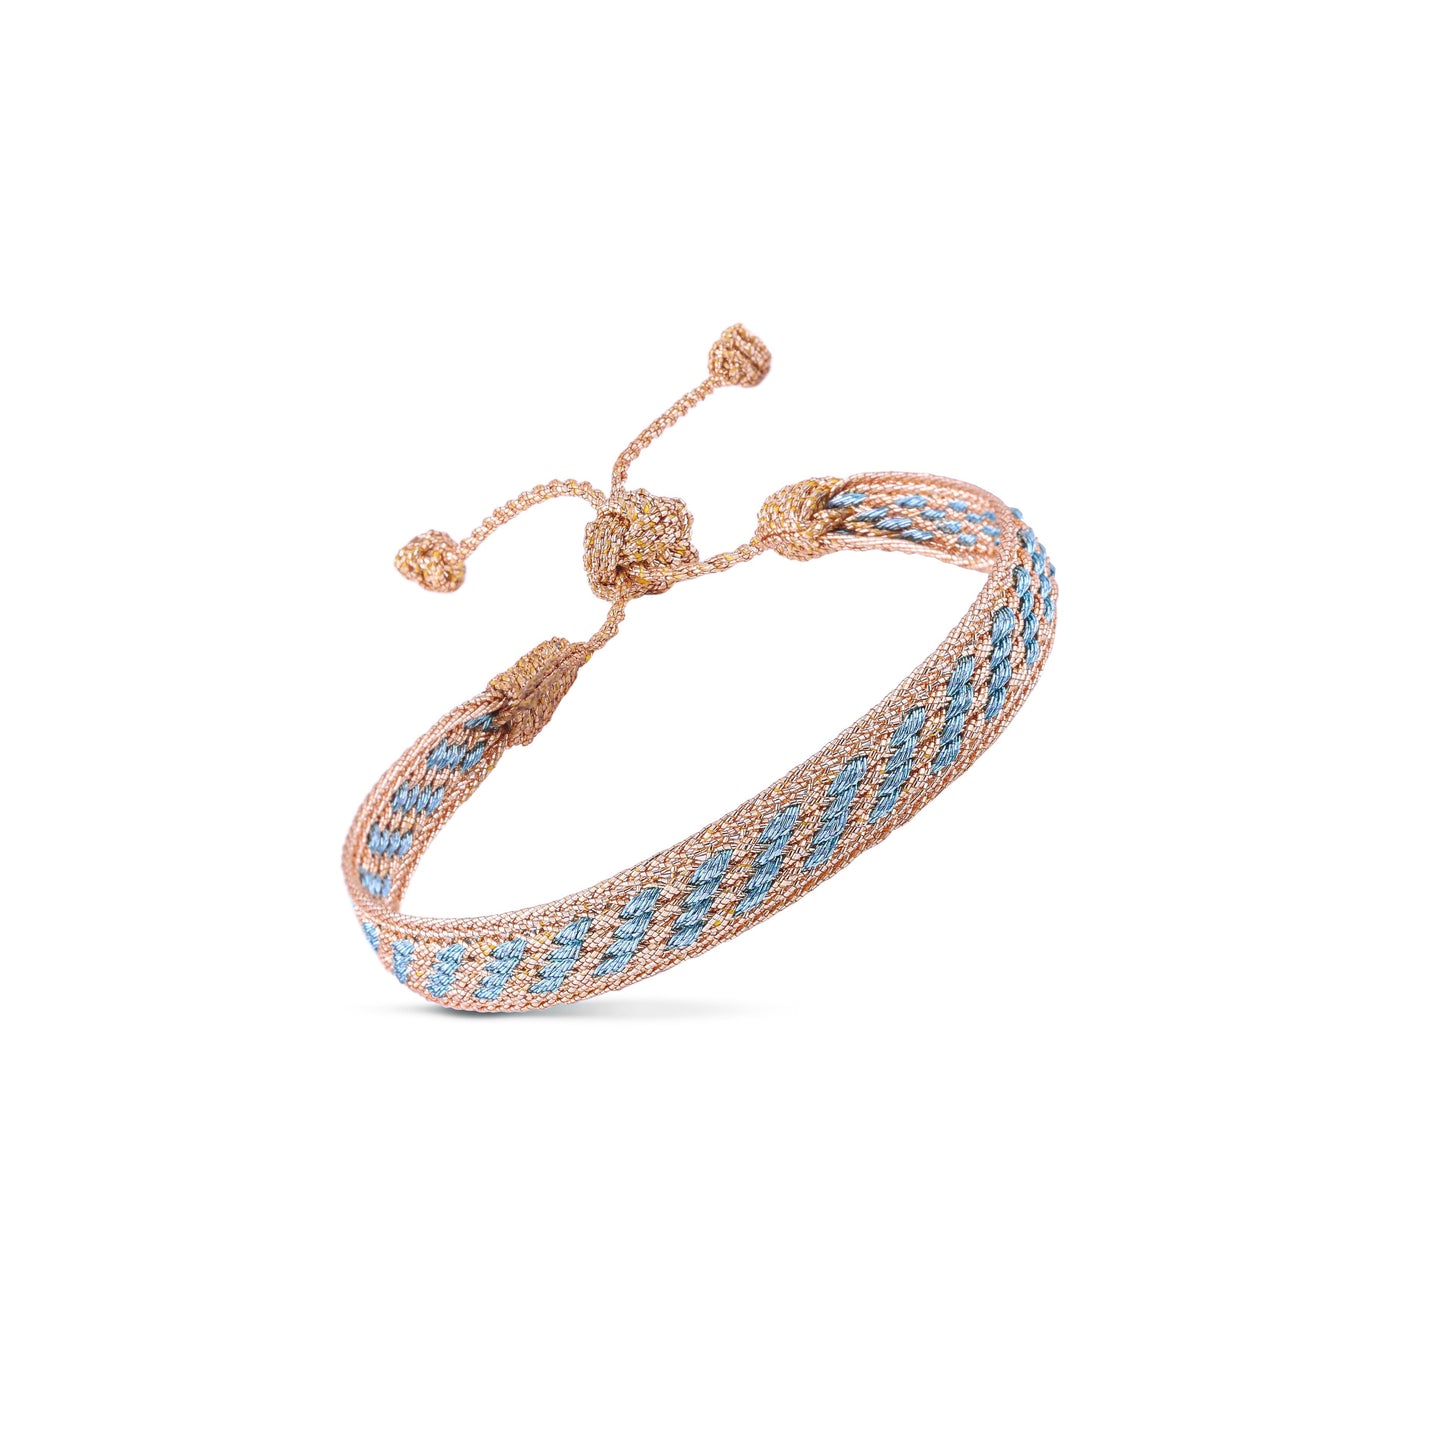 Izy n°2 Bracelet in Peach Sky Blue